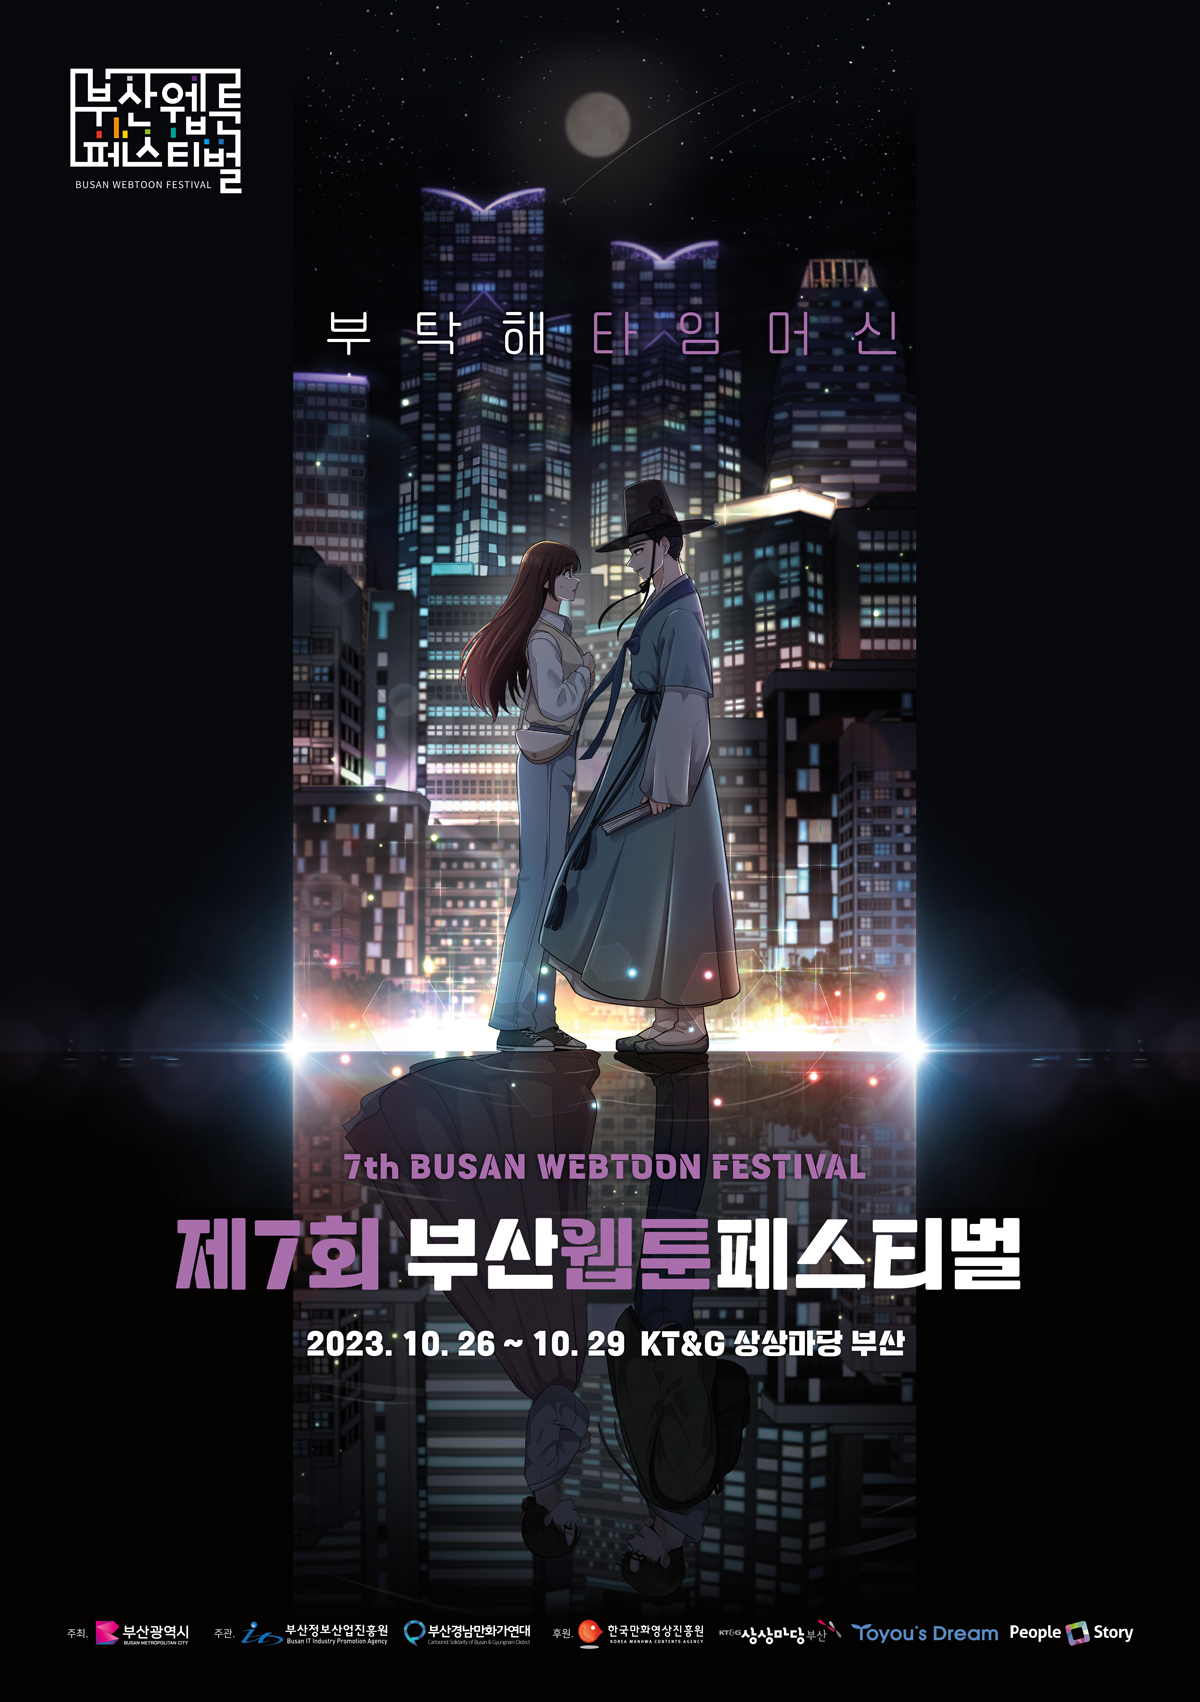 Poster for 7th Busan Webtoon Festival (Busan Webtoon Festival)